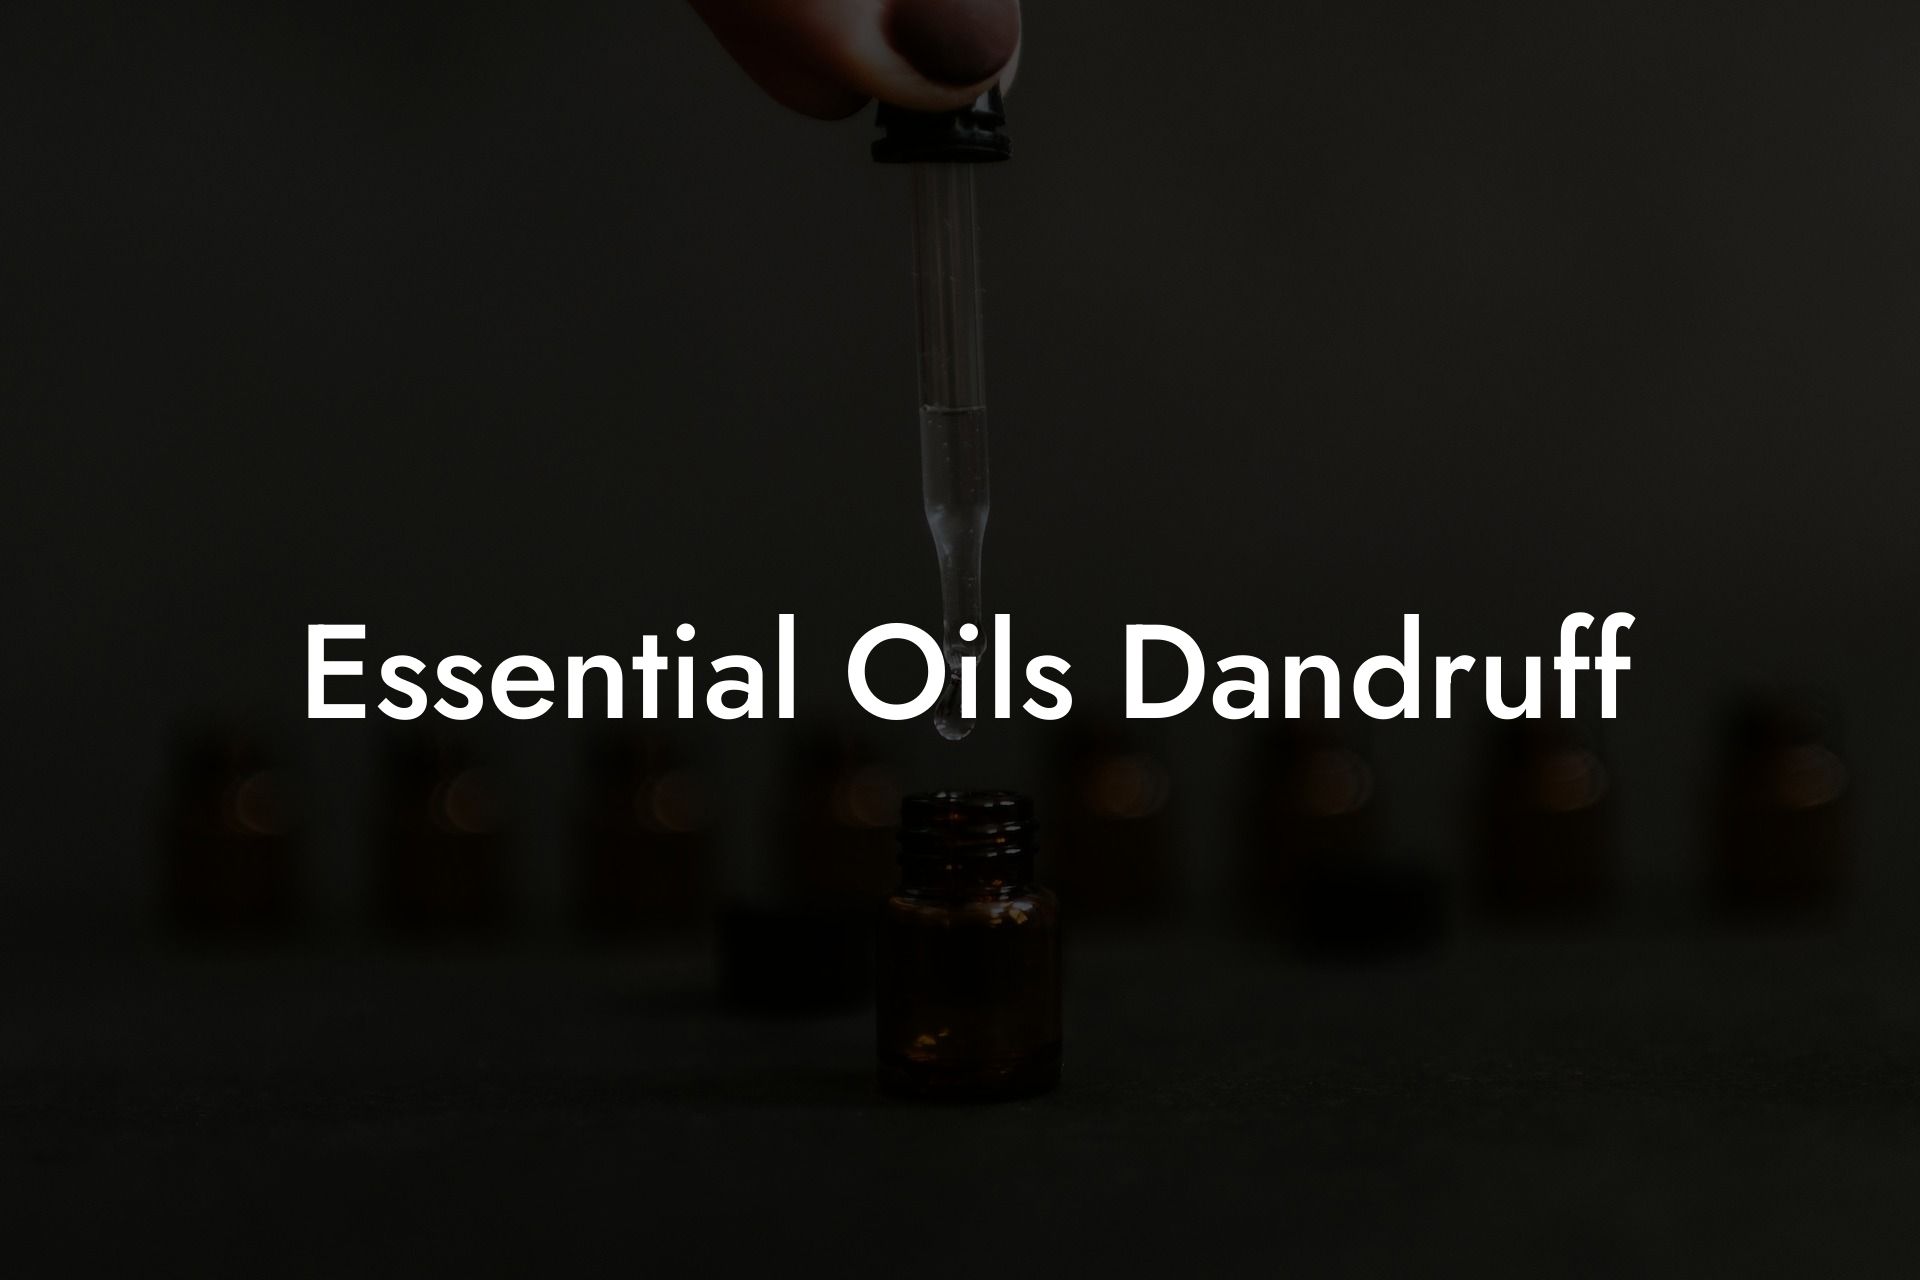 Essential Oils Dandruff